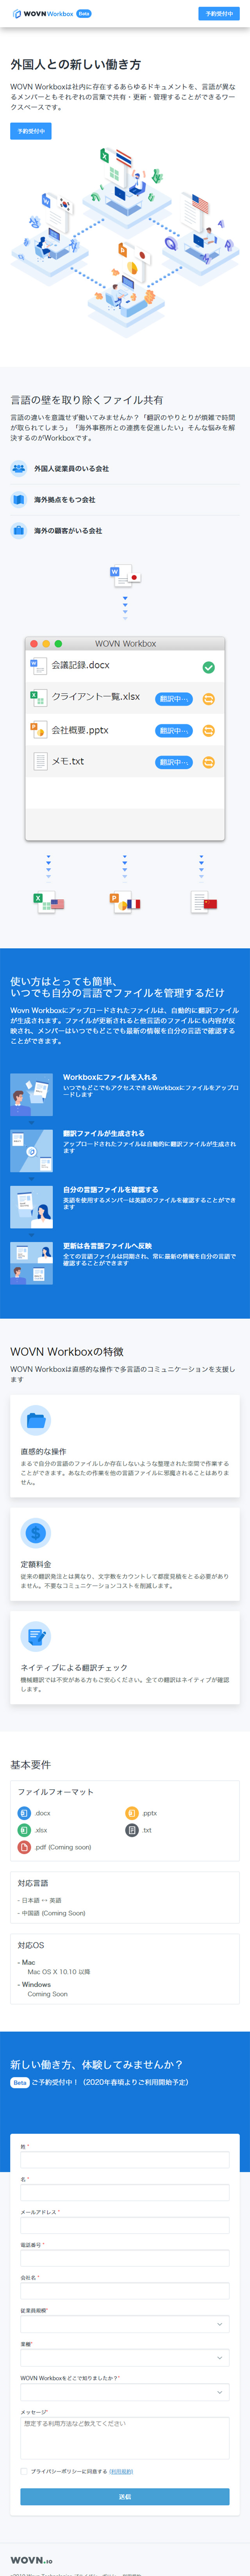 WOVN WORKBOX_sp_1